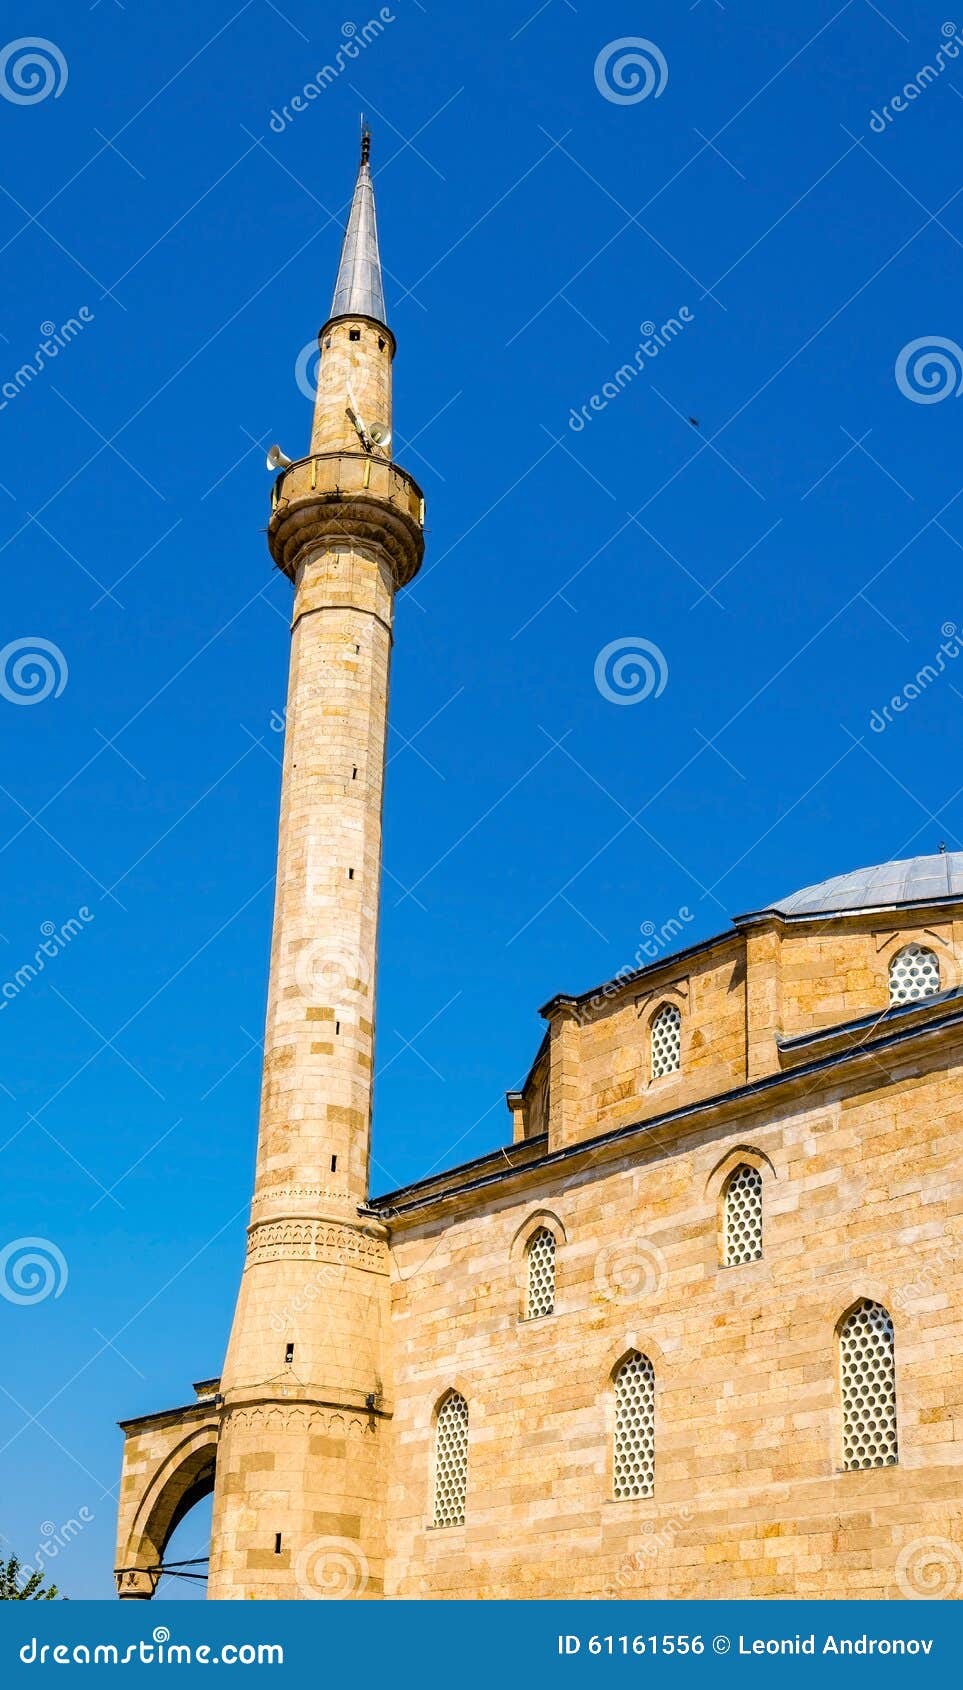 sulltan mehmet fatih mosque in pristina